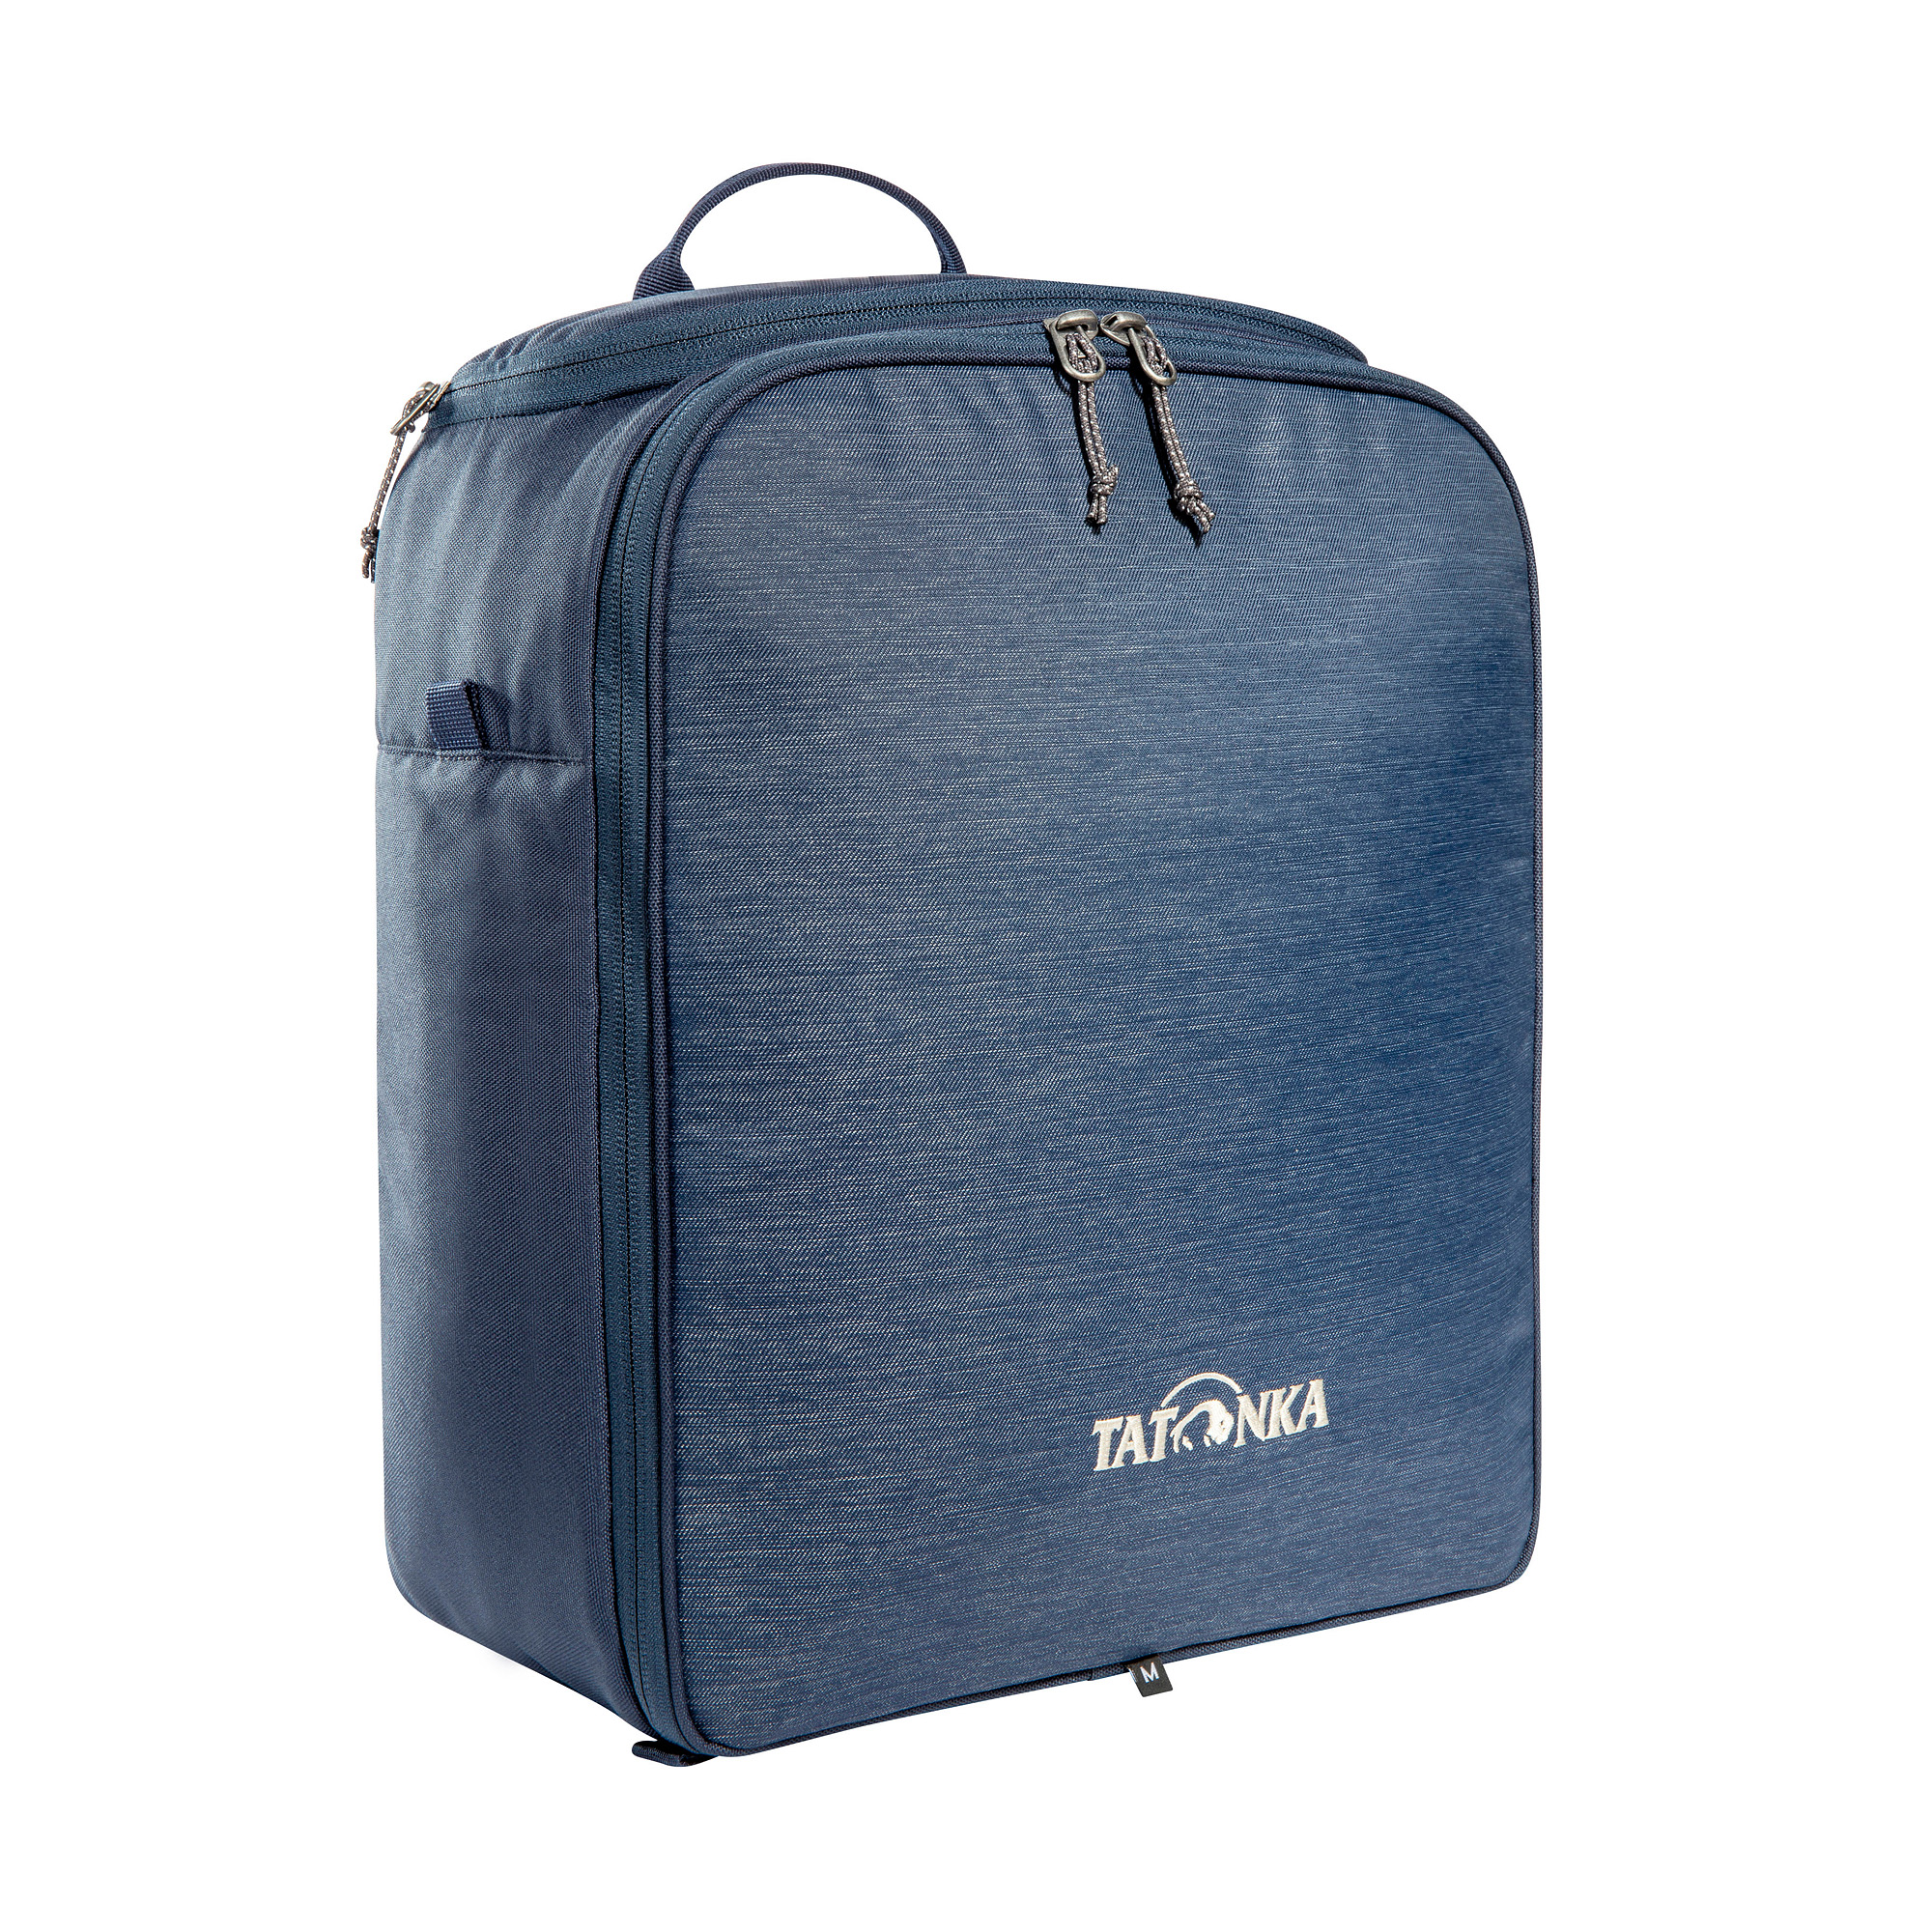 Tatonka Cooler Bag M navy blau Sonstige Taschen 4013236384543